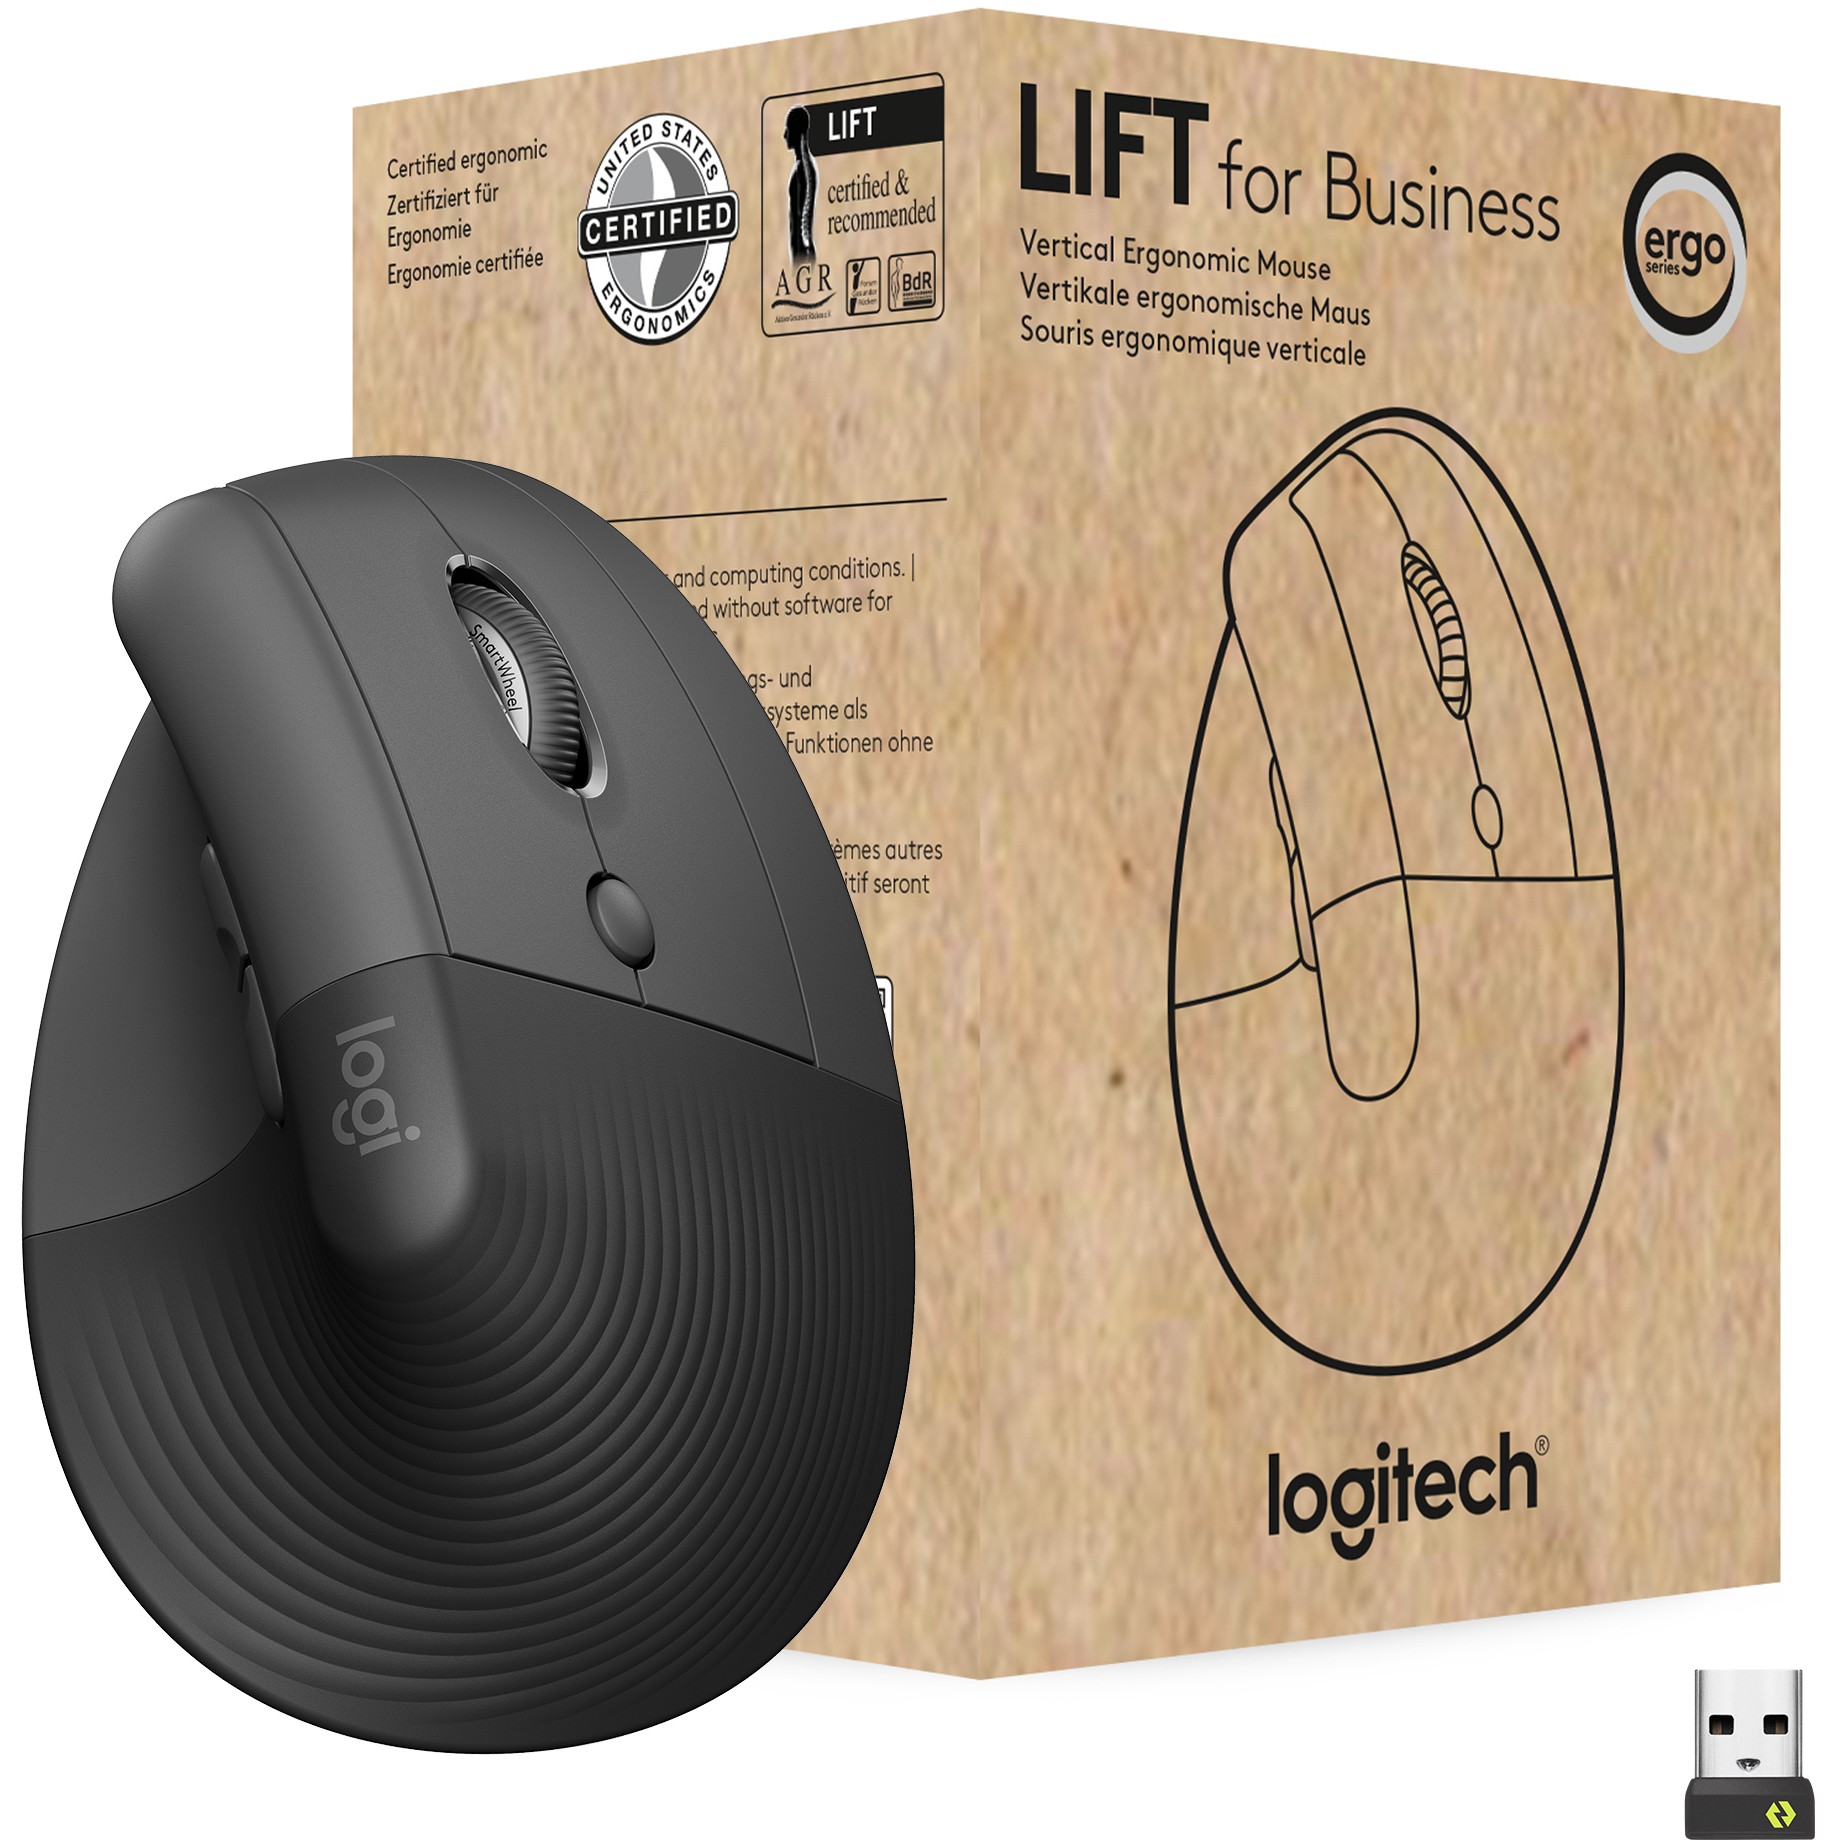 Logitech Lift for Business mouse